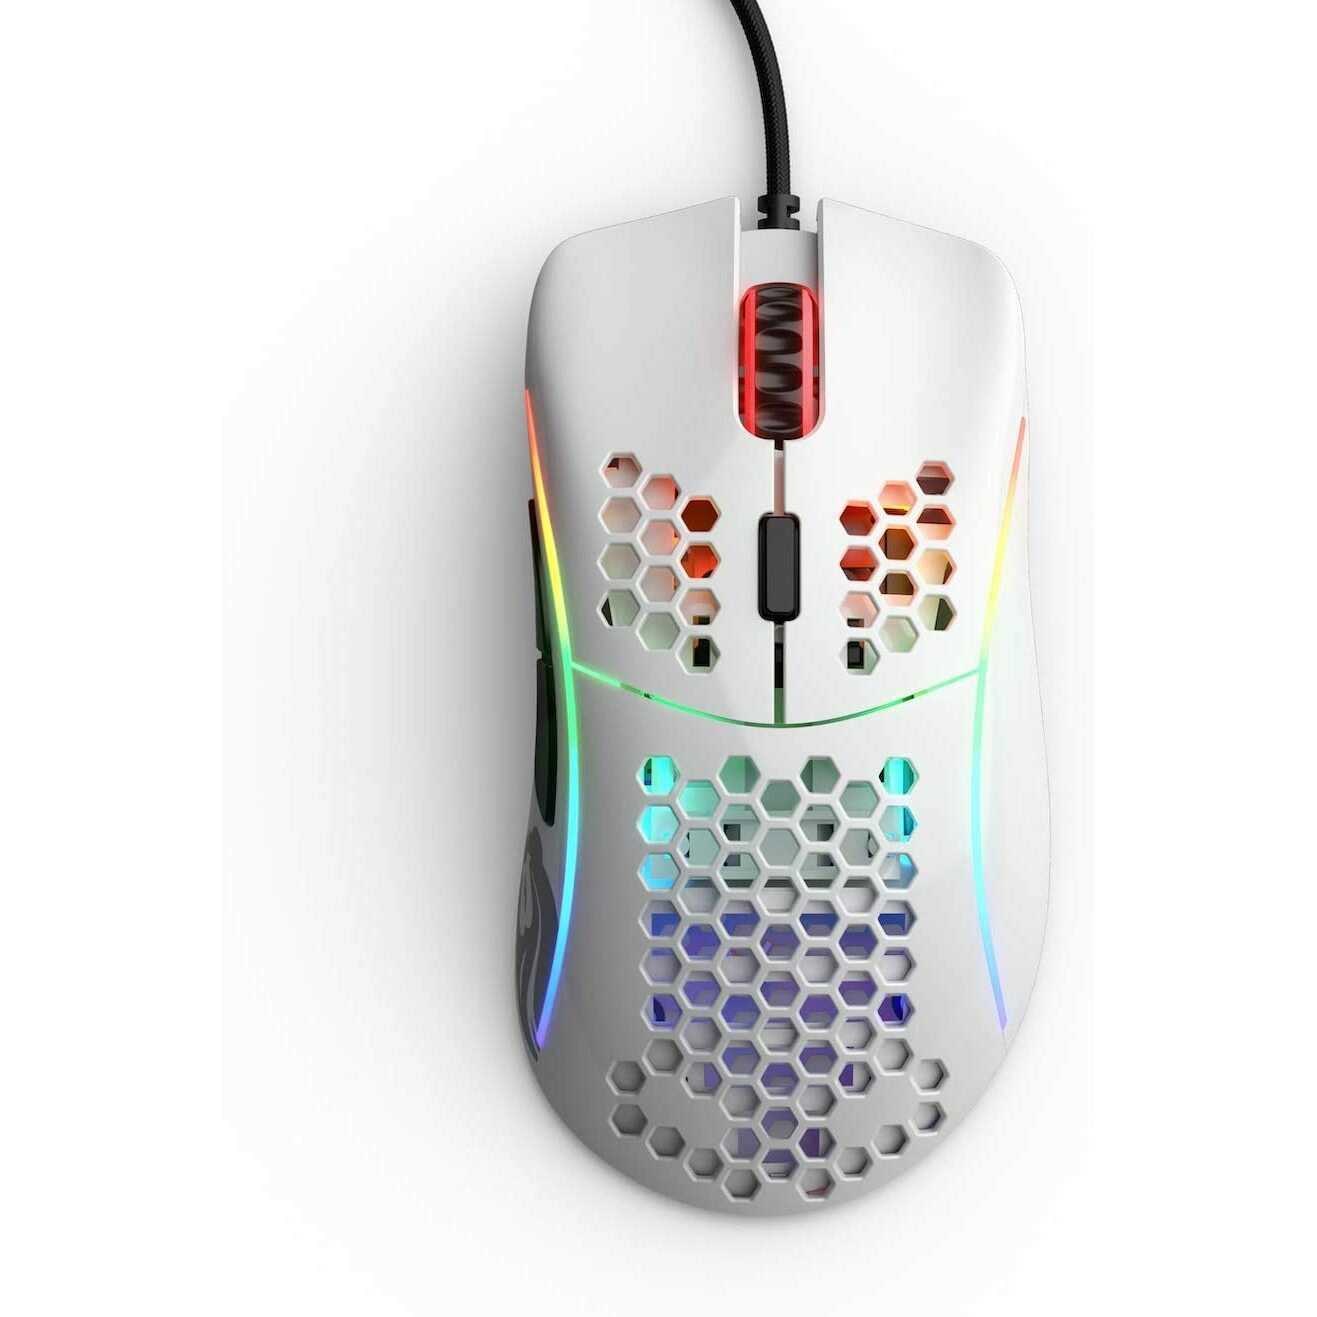 Glorious Model O 2 USB RGB Optical Gaming Mouse - Matte White